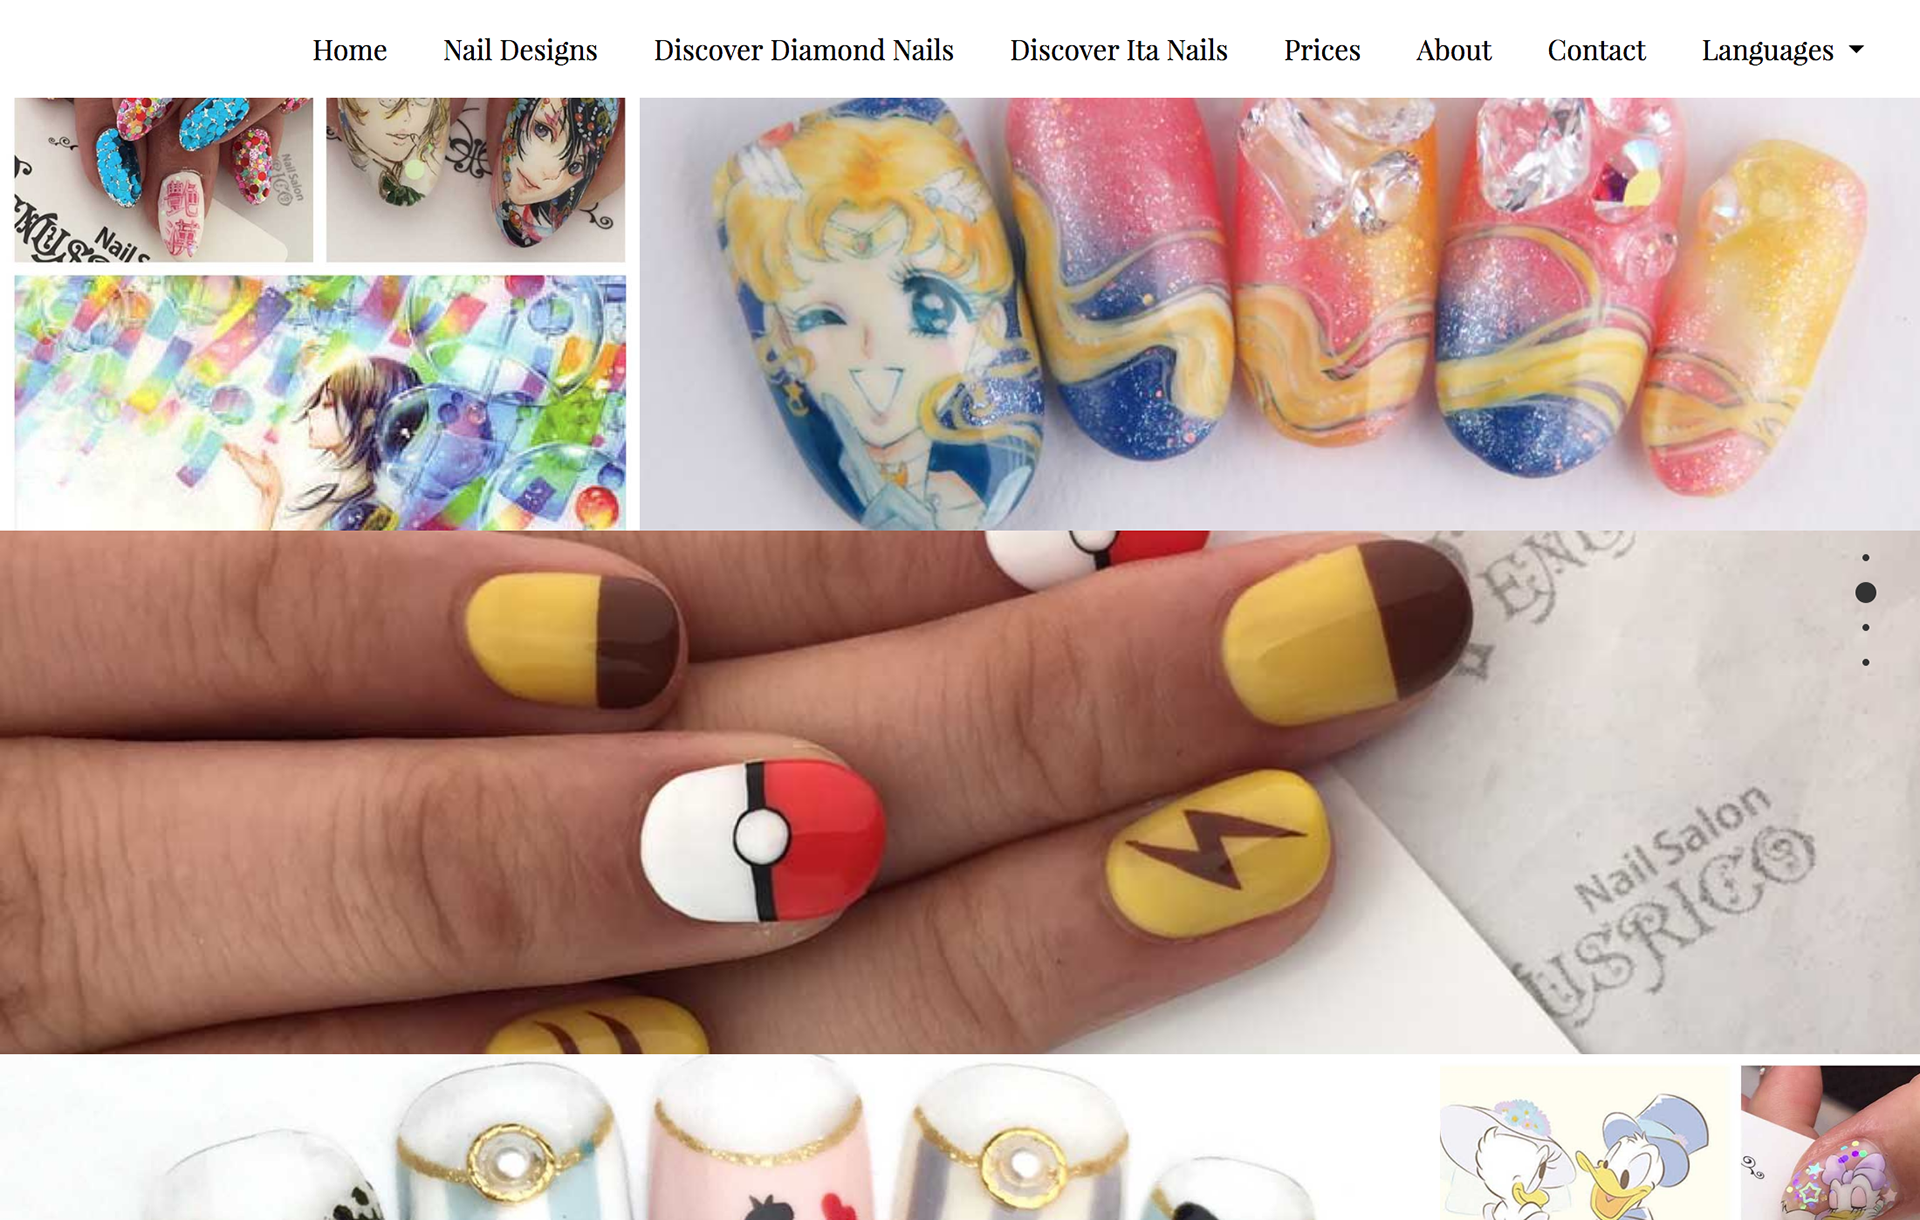 Website nail gallery of designs of Pokemon, Sailer Moon, Disney, etc. UI design by Katherine Delorme